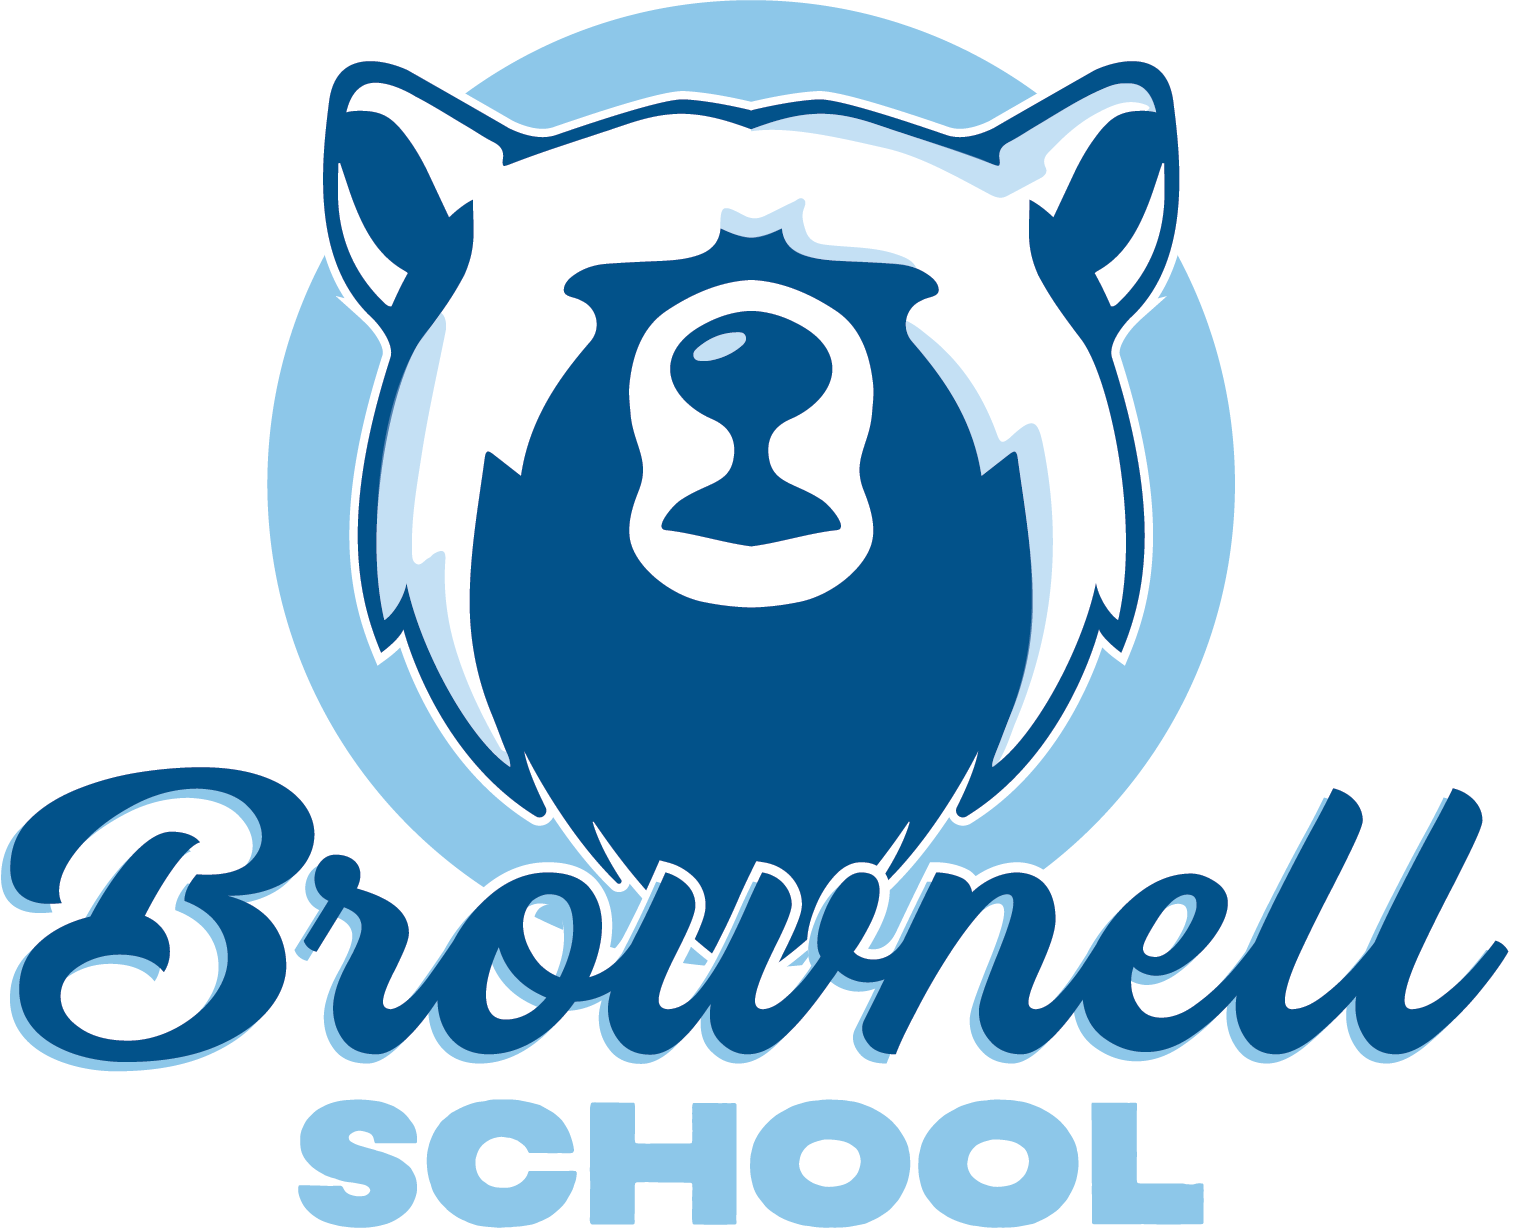 Brownell School logo